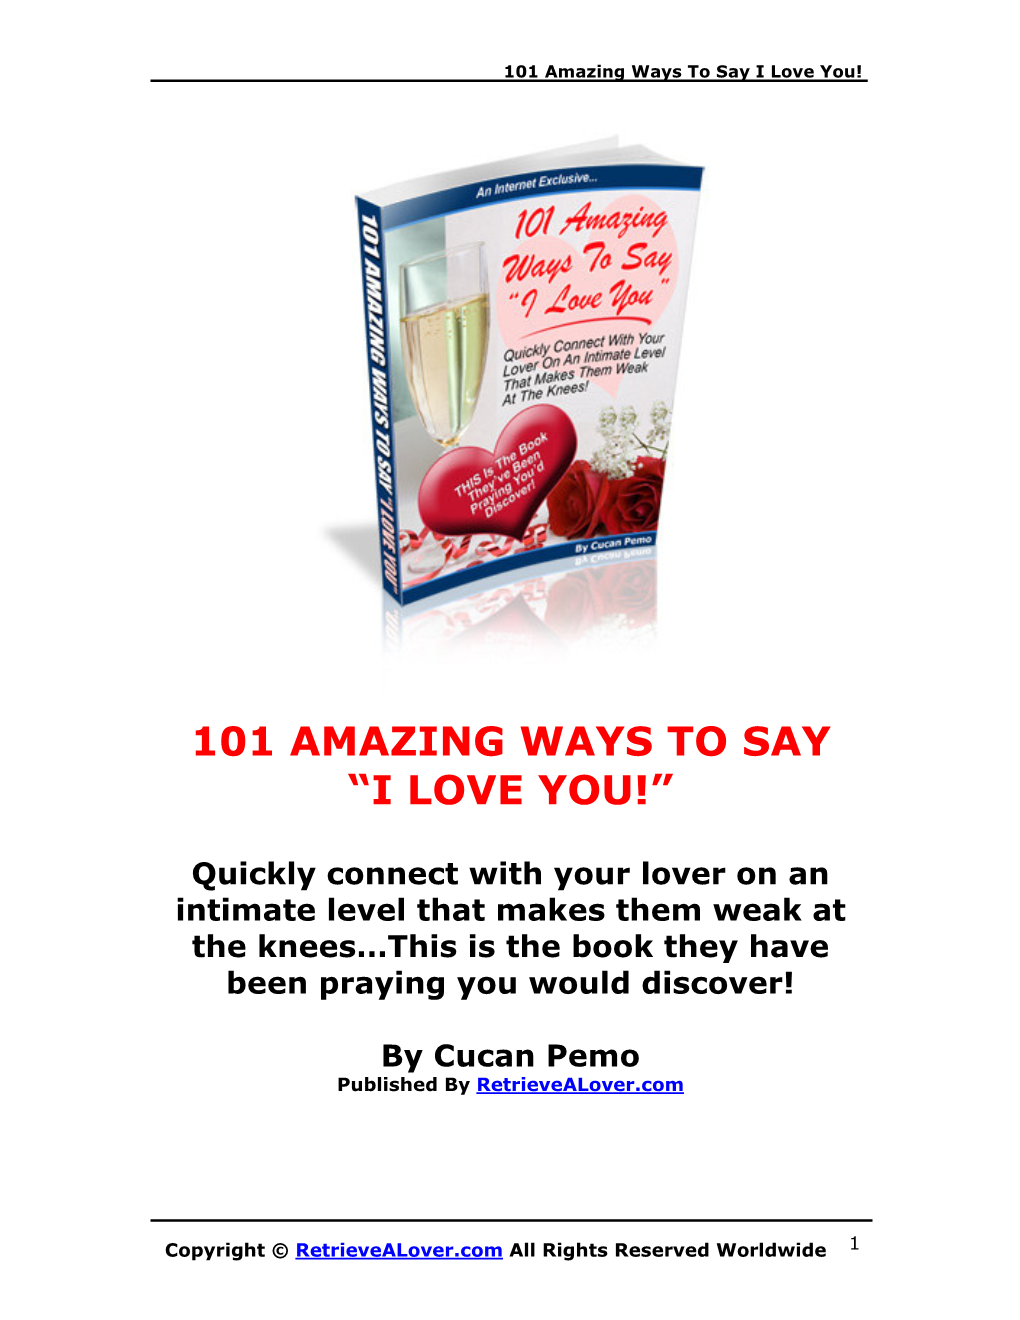 101 Amazing Ways to Say “I Love You!”